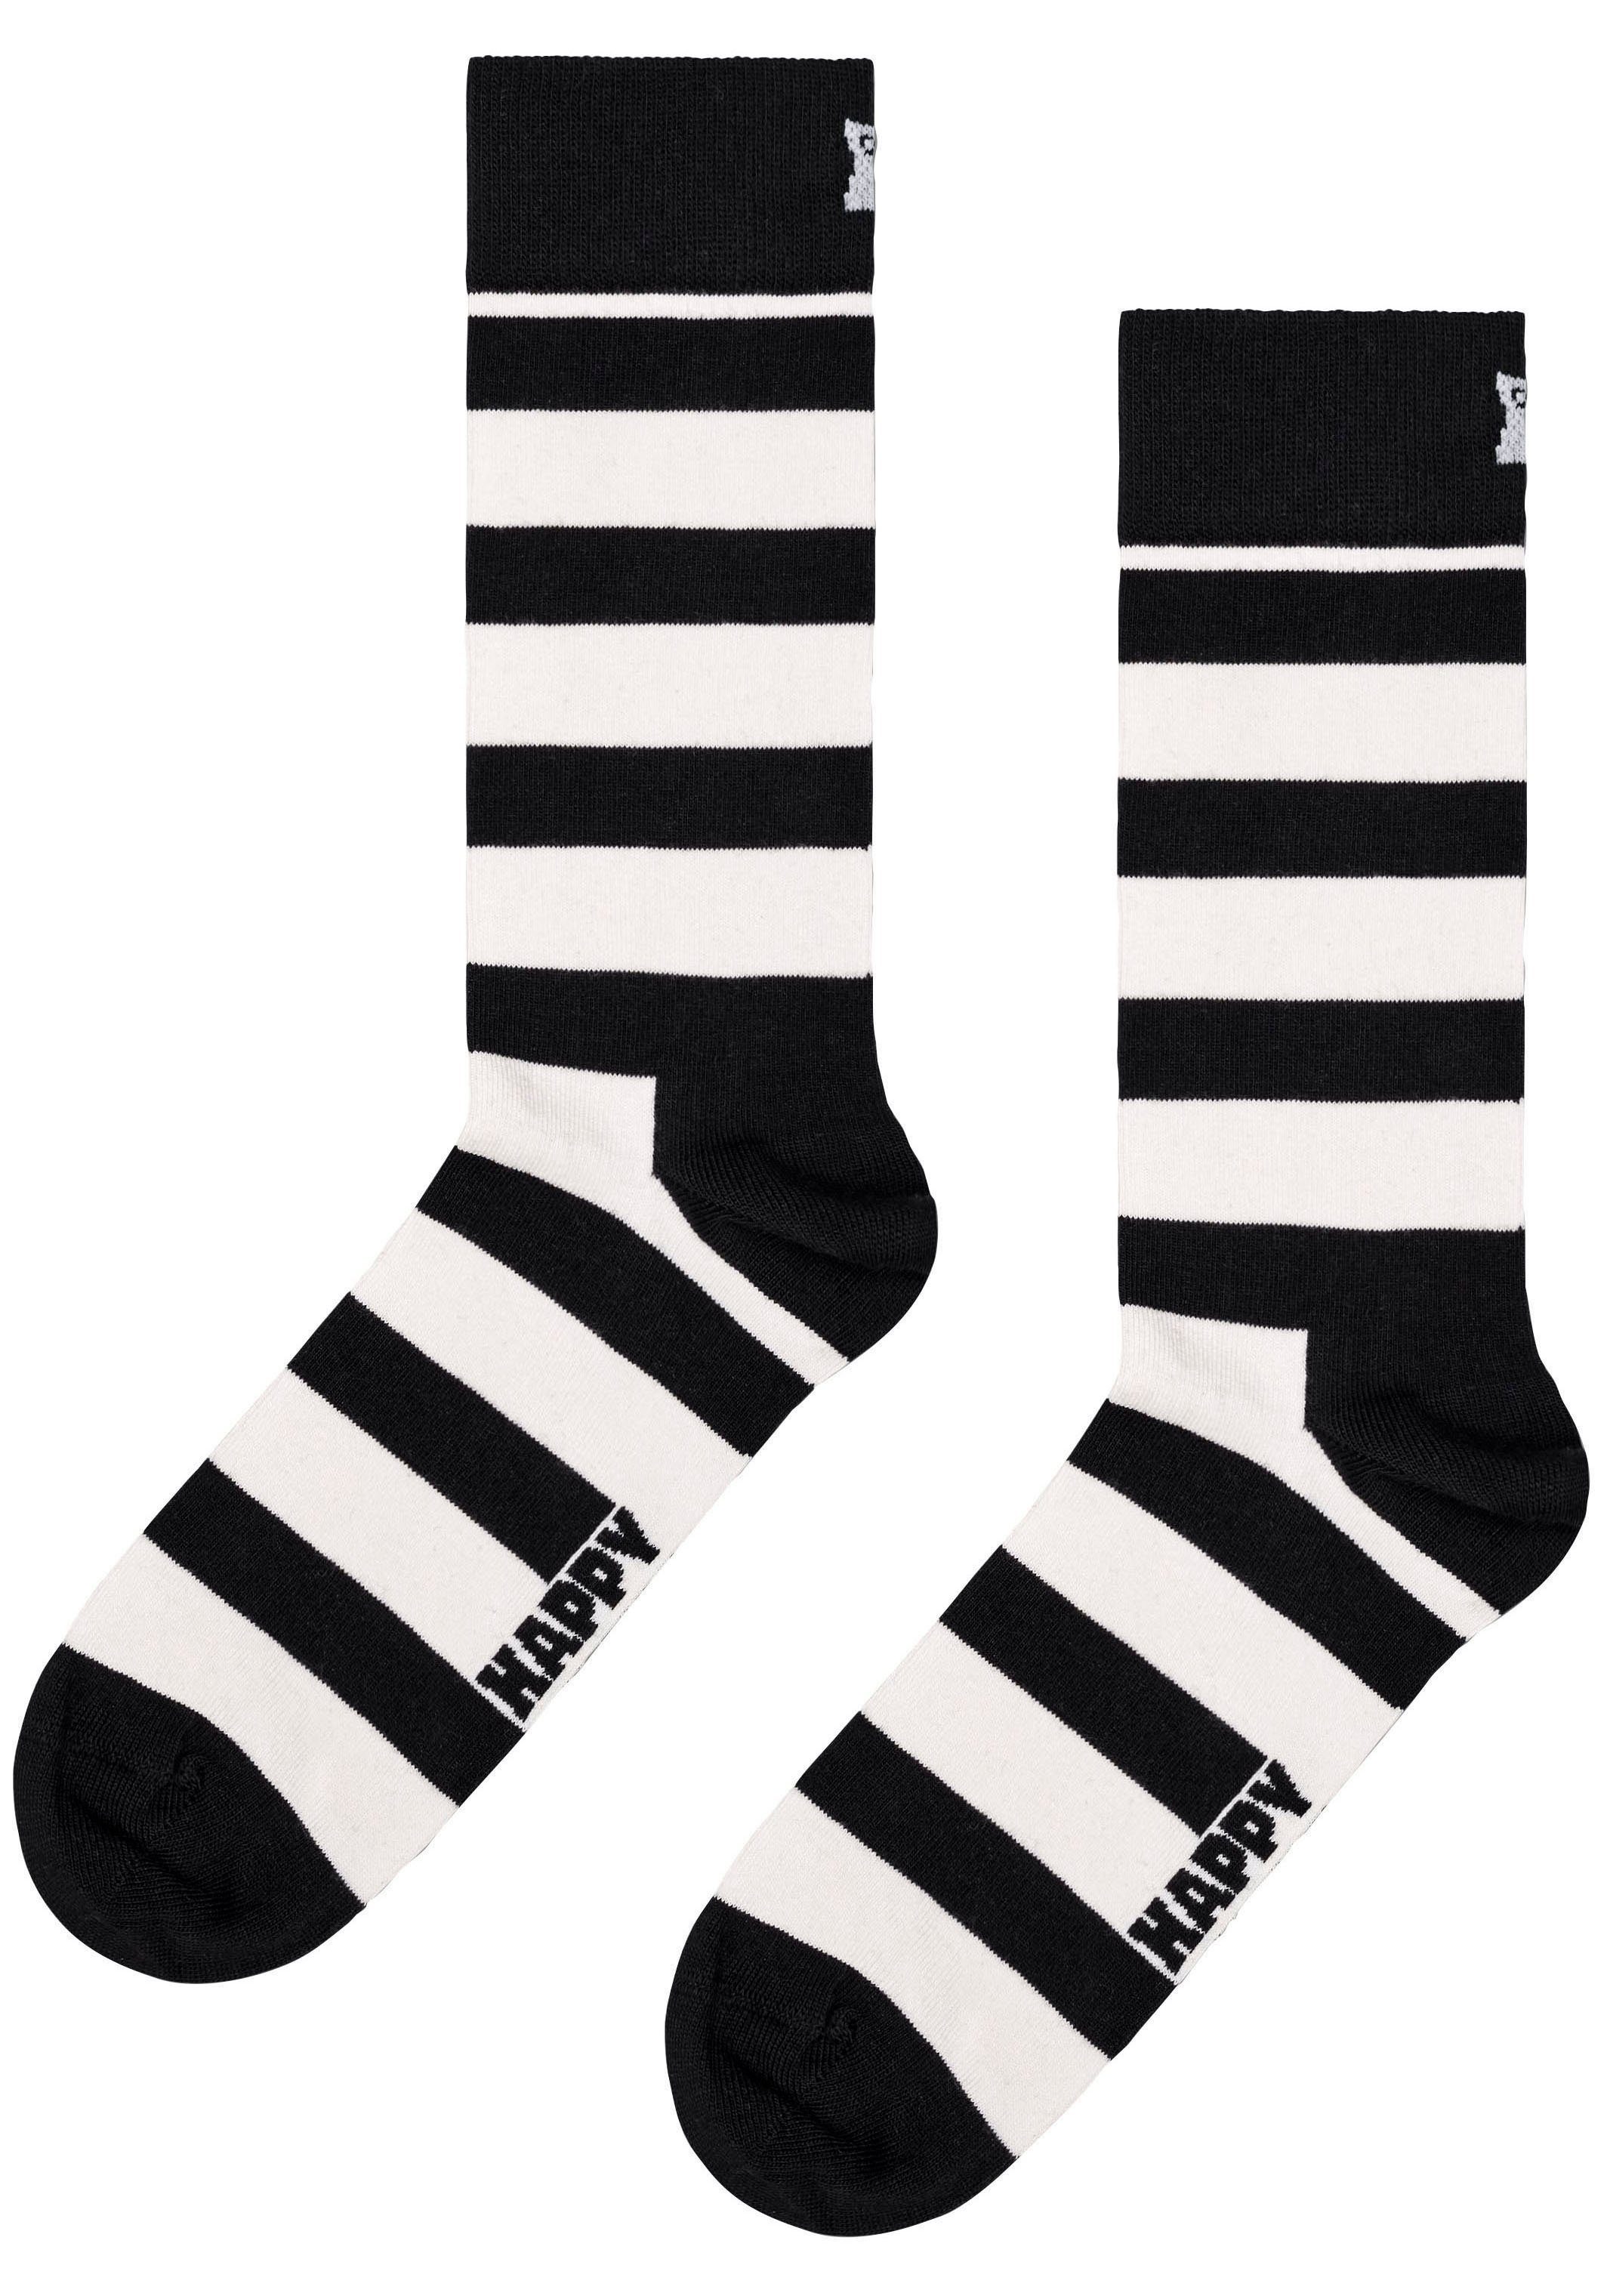 (Packung, Socken Set 4-Paar) Socks Classic grey White Black Happy Gift & Socks dark